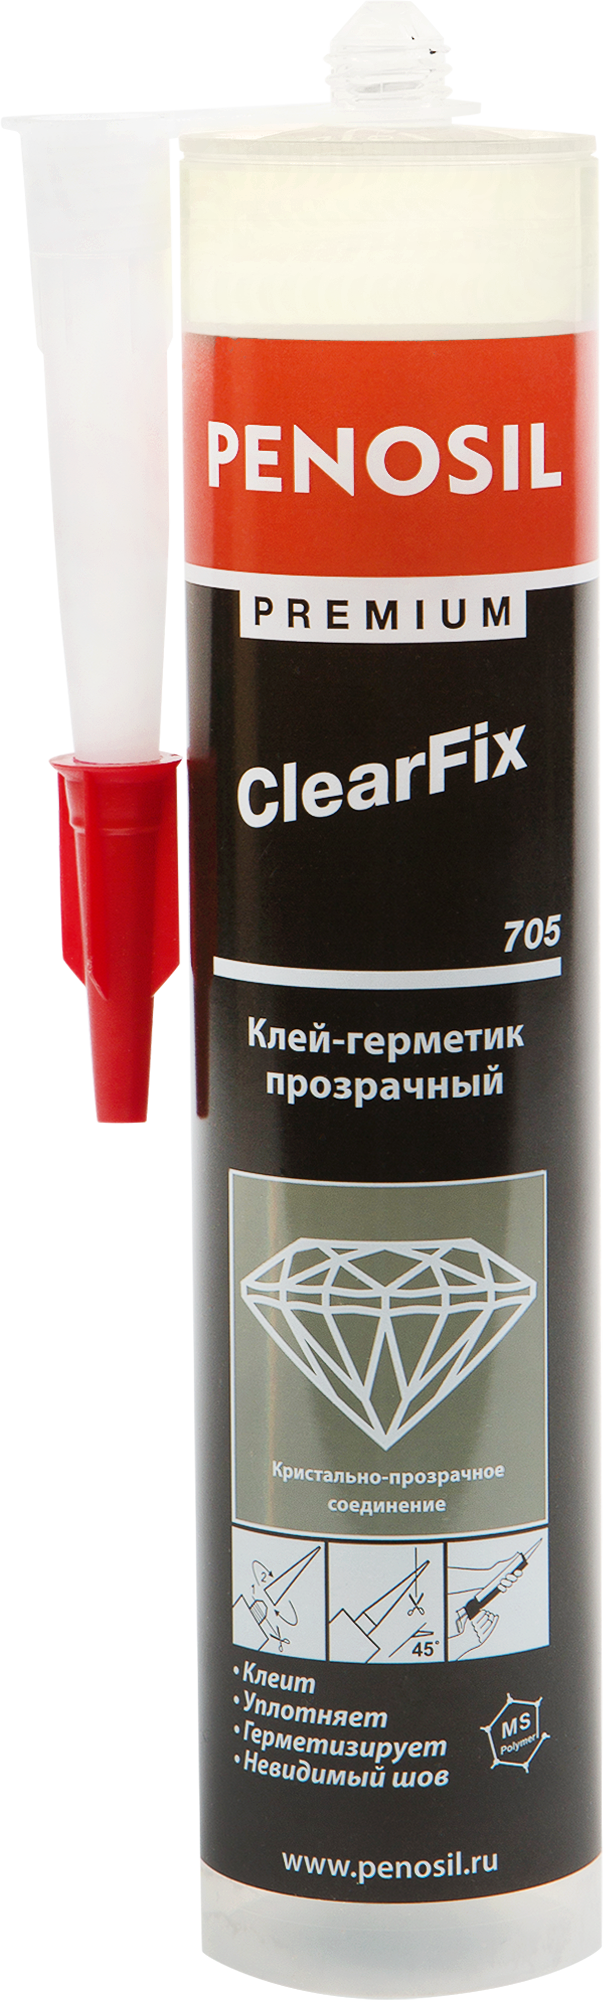 Clearfix. Penosil clearfix 705 клей герметик. Клей Penosil Premium Seal&Fix 709 универсальный. Penosil 705 клей герметик. 10. Клей-герметик, прозрачный Penosil Premium clearfix 705.